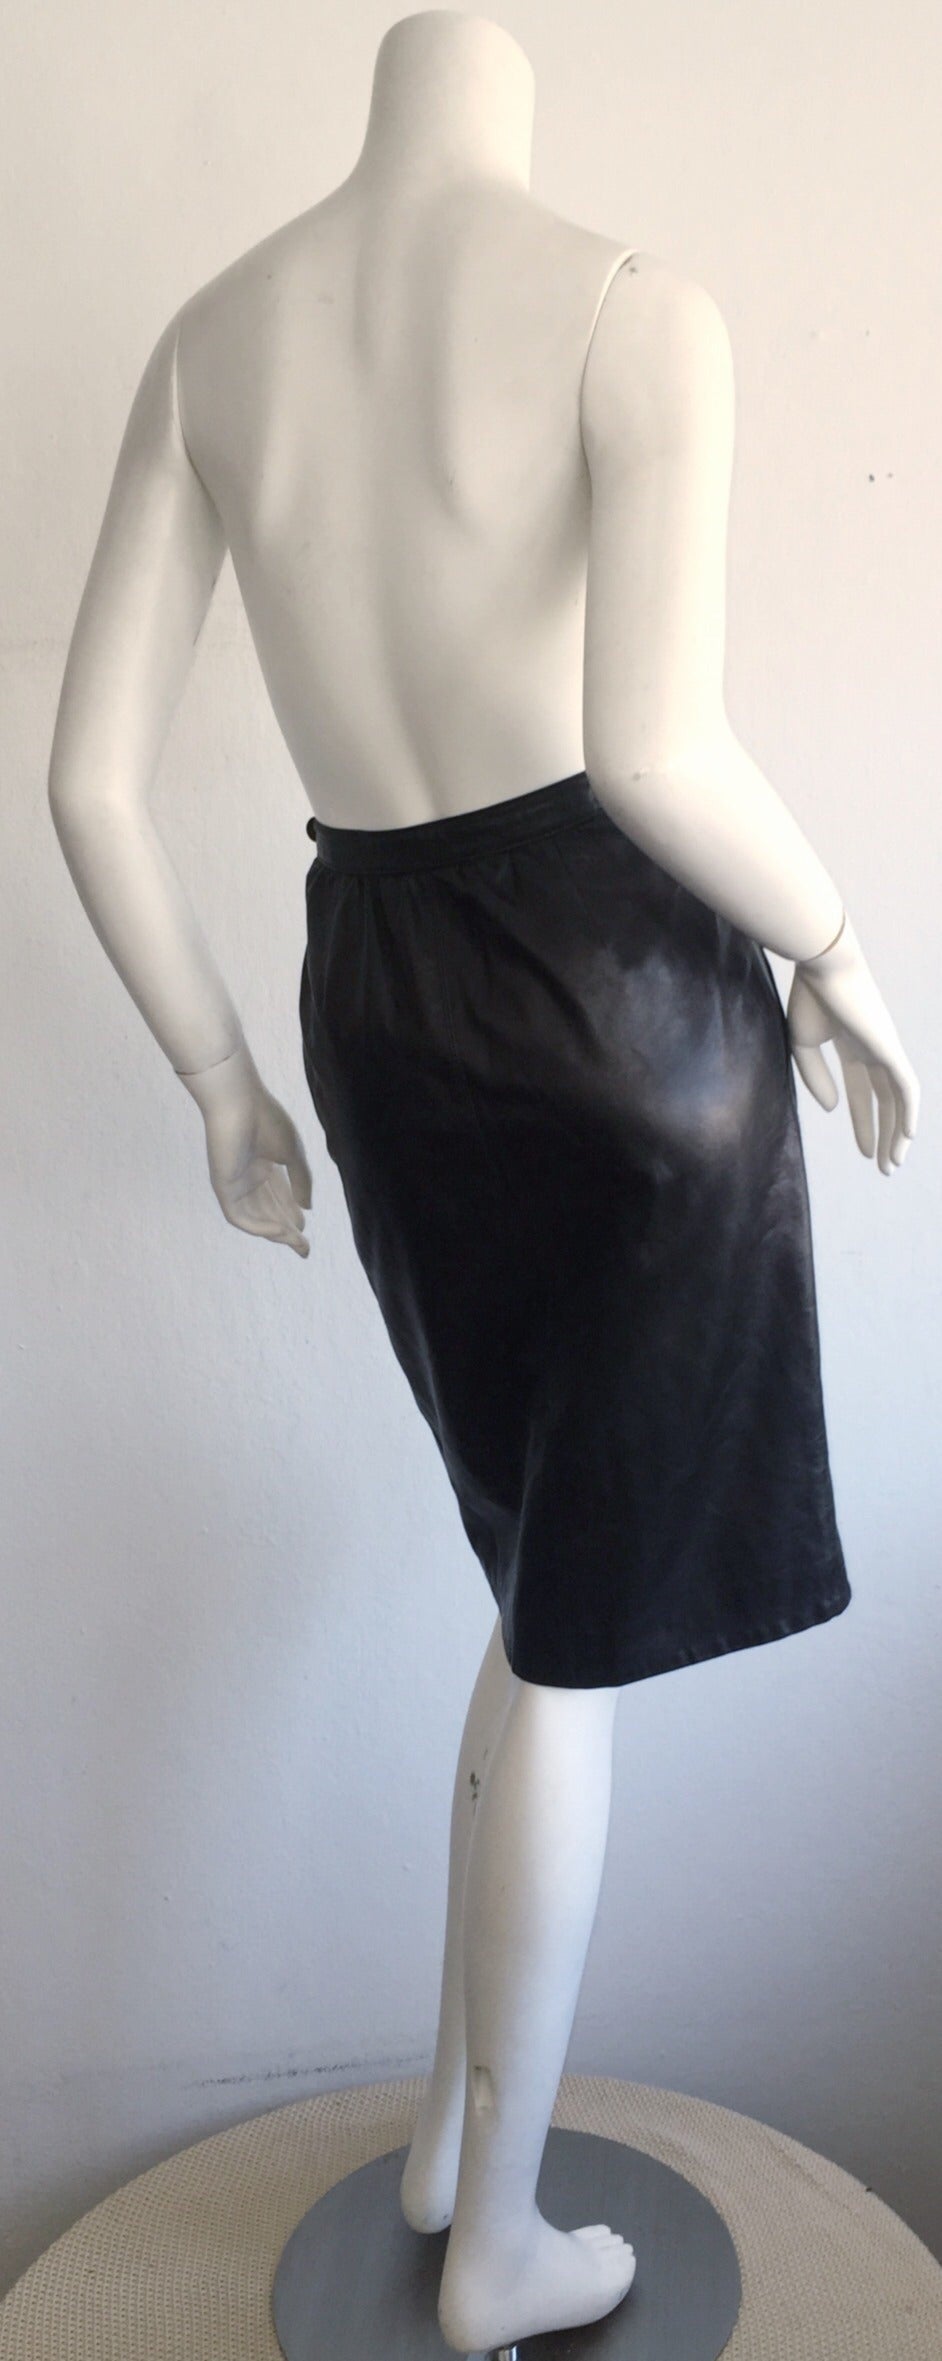 ysl leather skirt